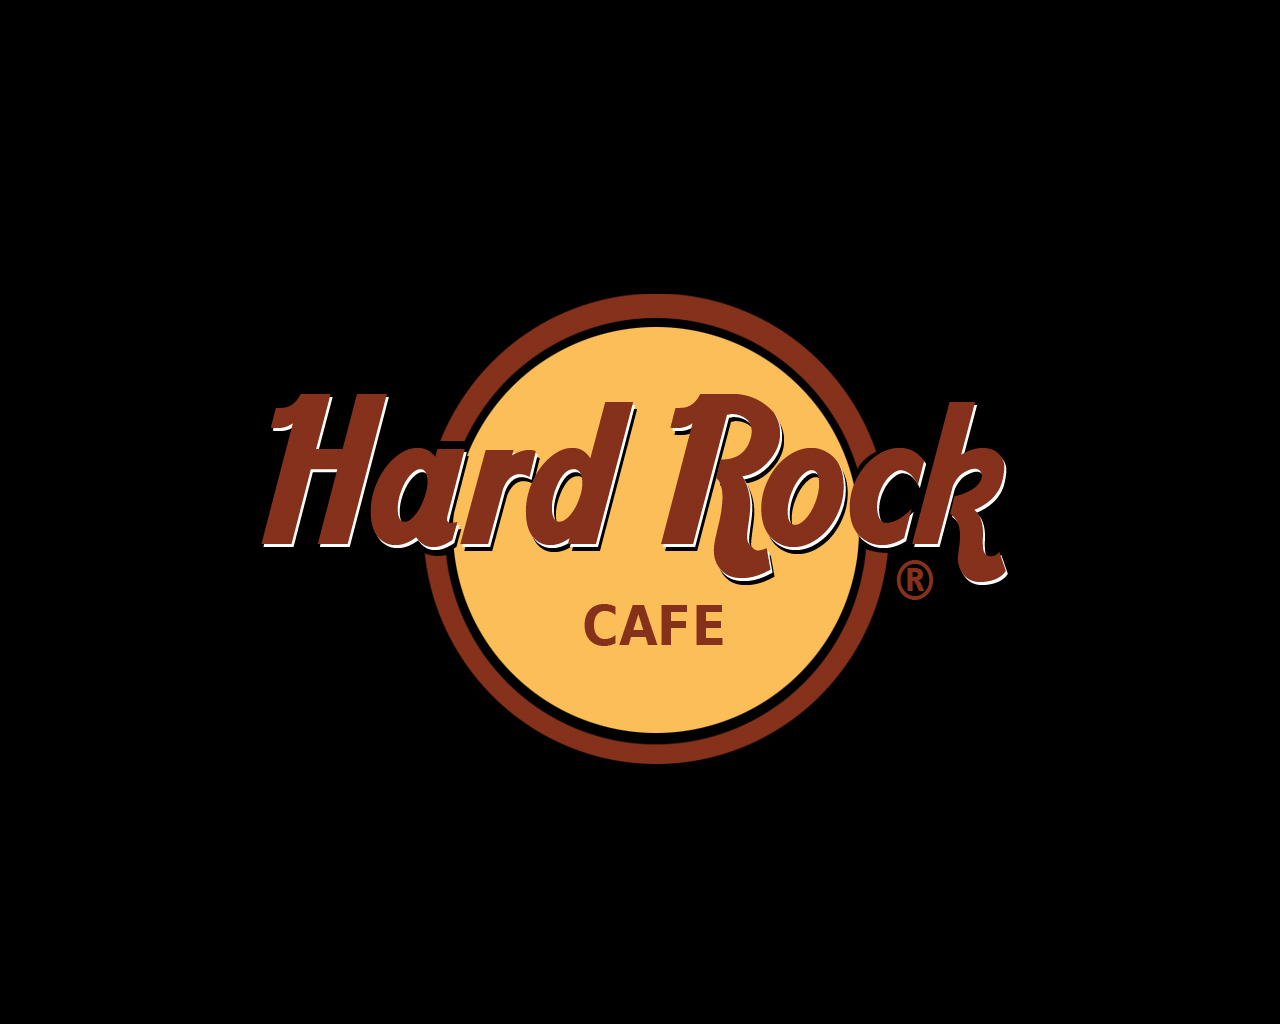 Hard Rock Wallpapers